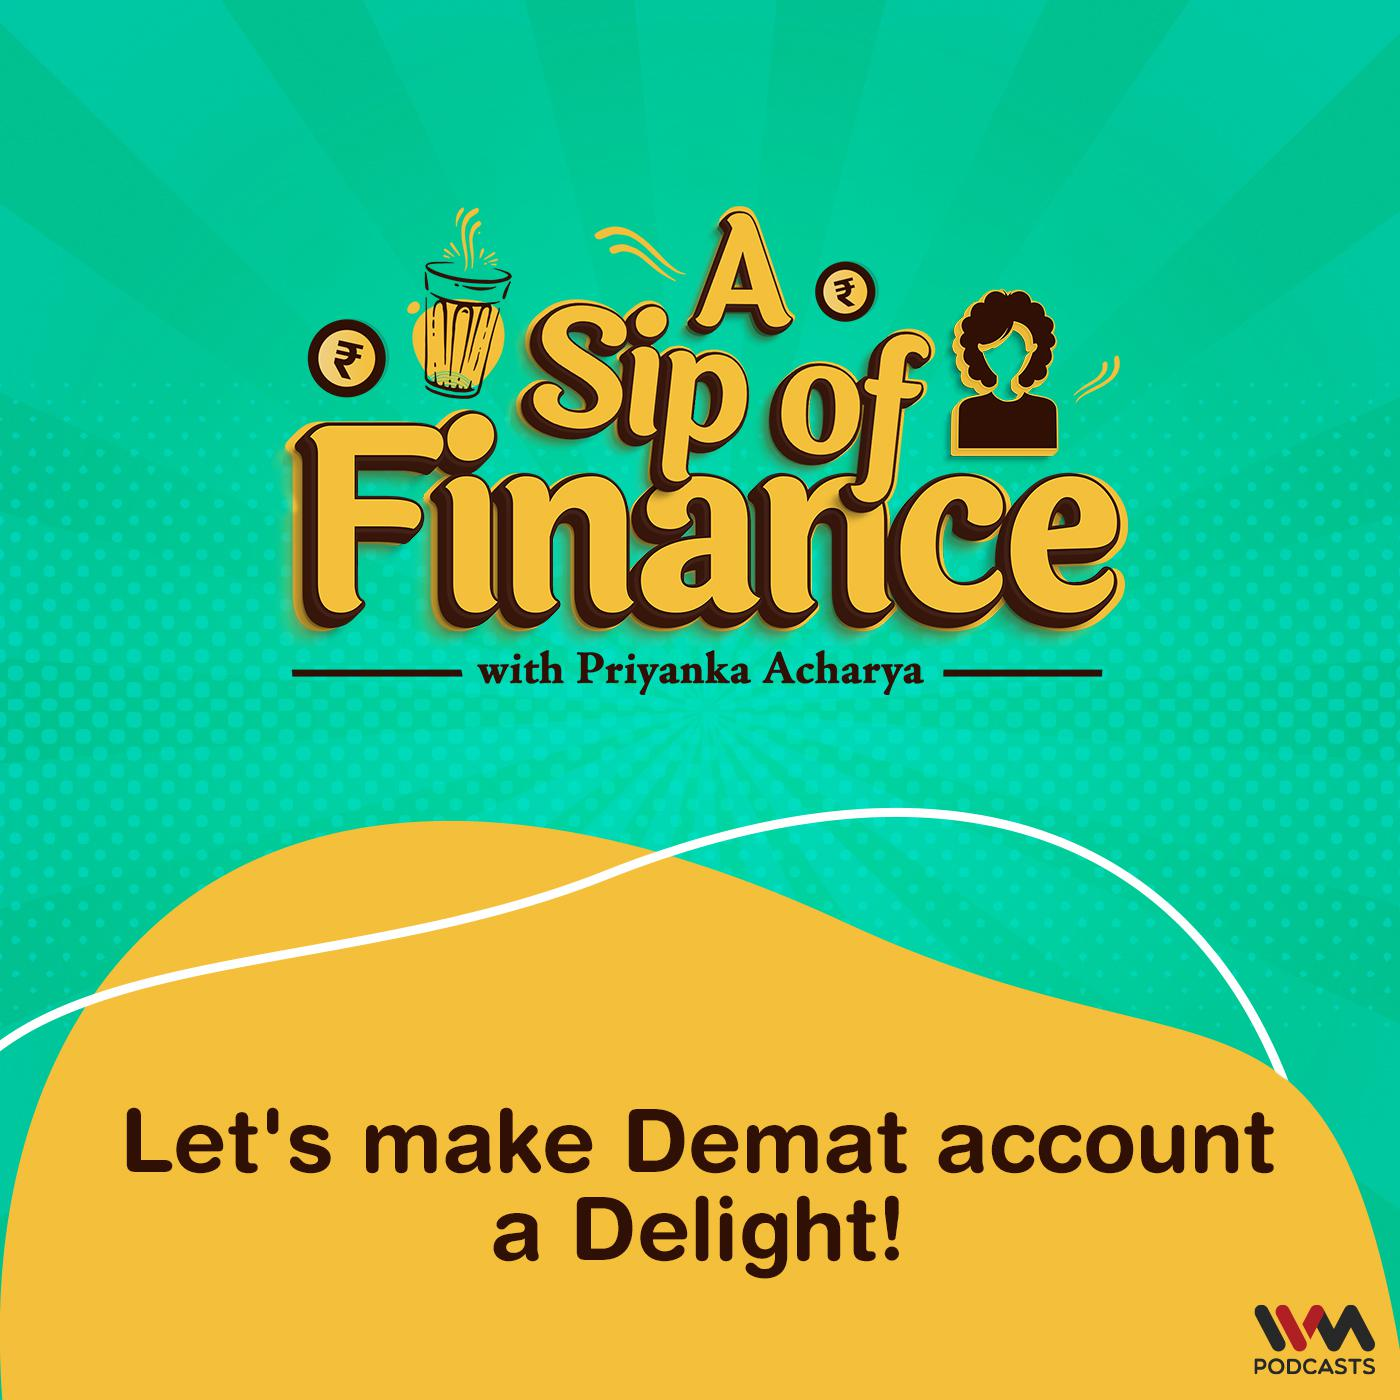 Let's make Demat account a Delight!